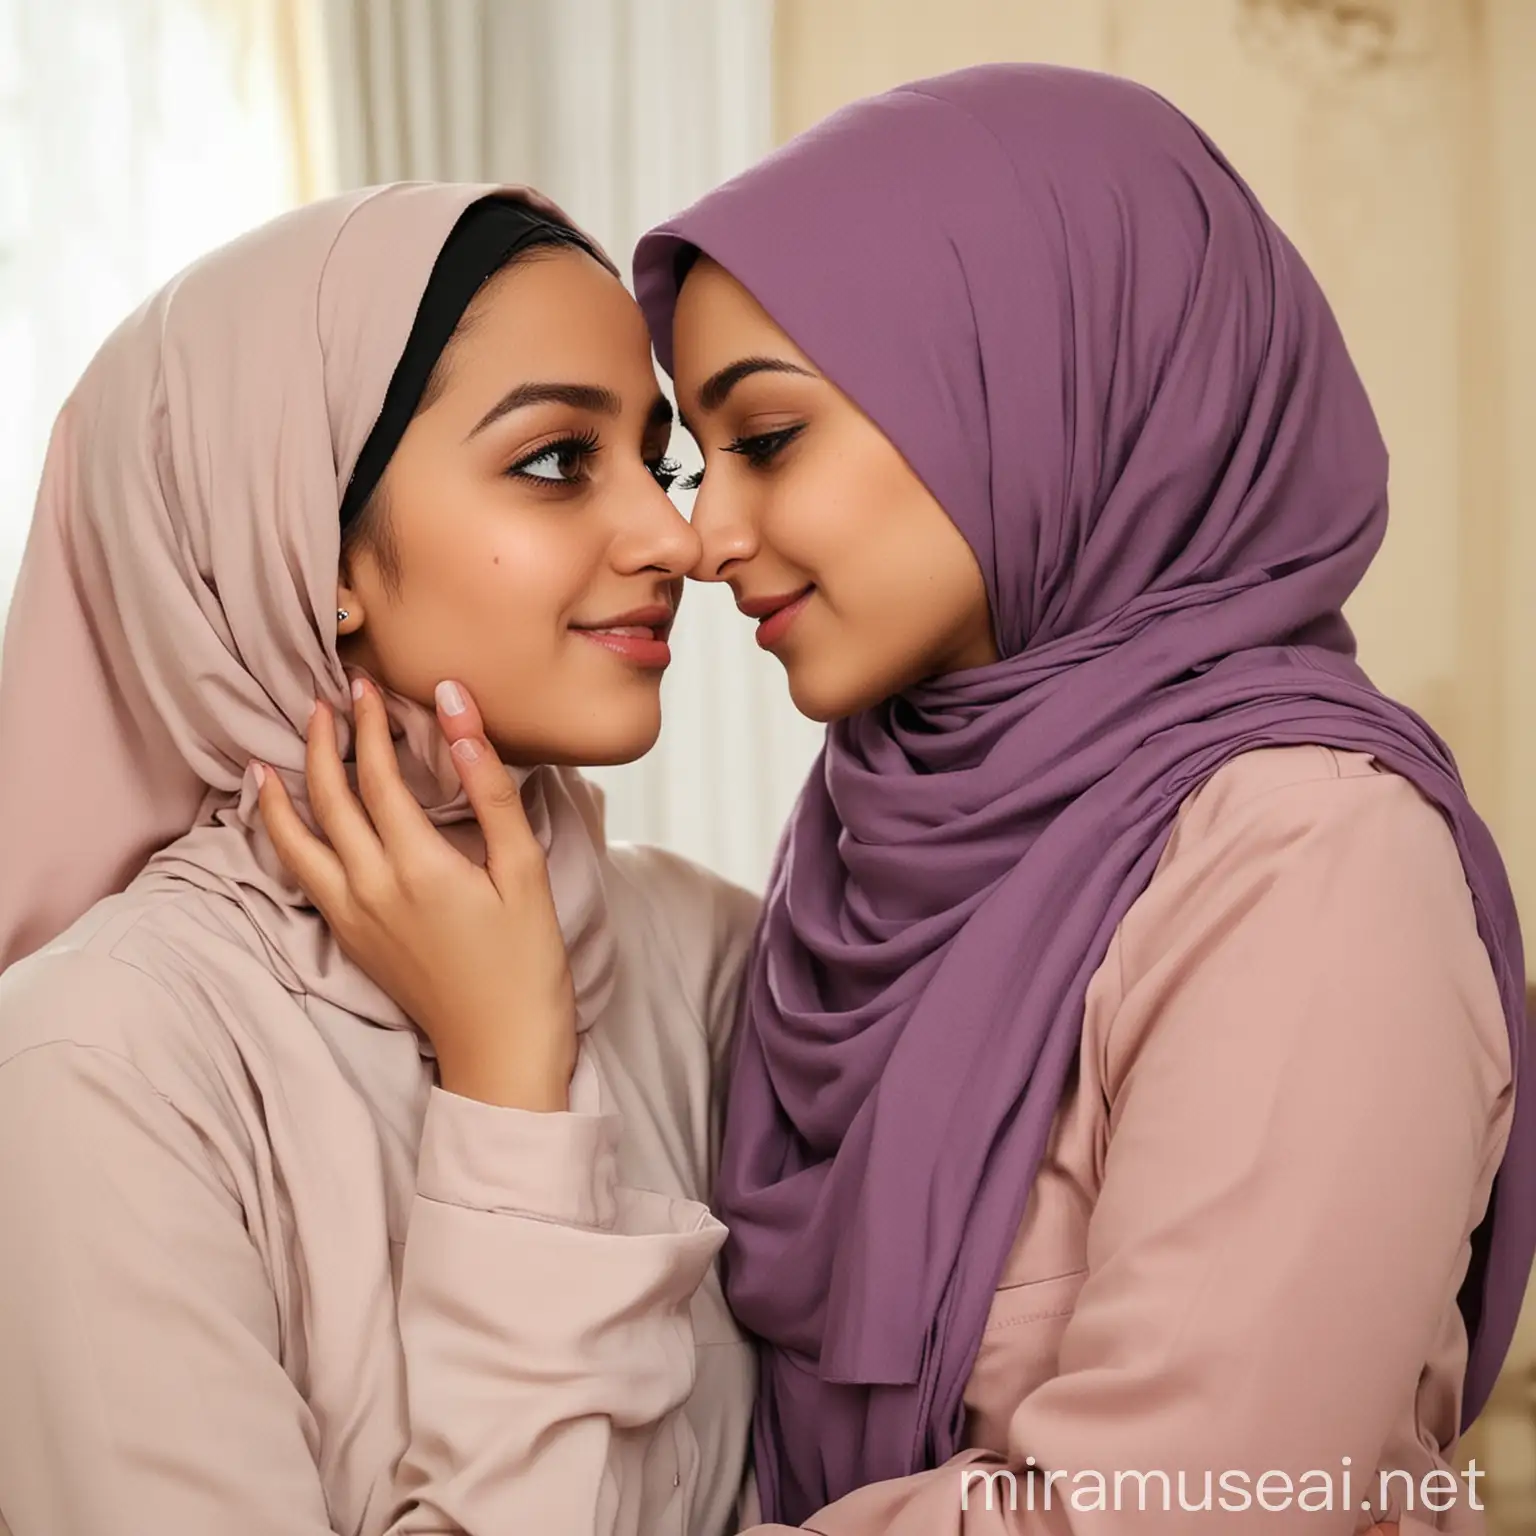 Hijabi 2 Girls Lesbian Muslim in the home kiss